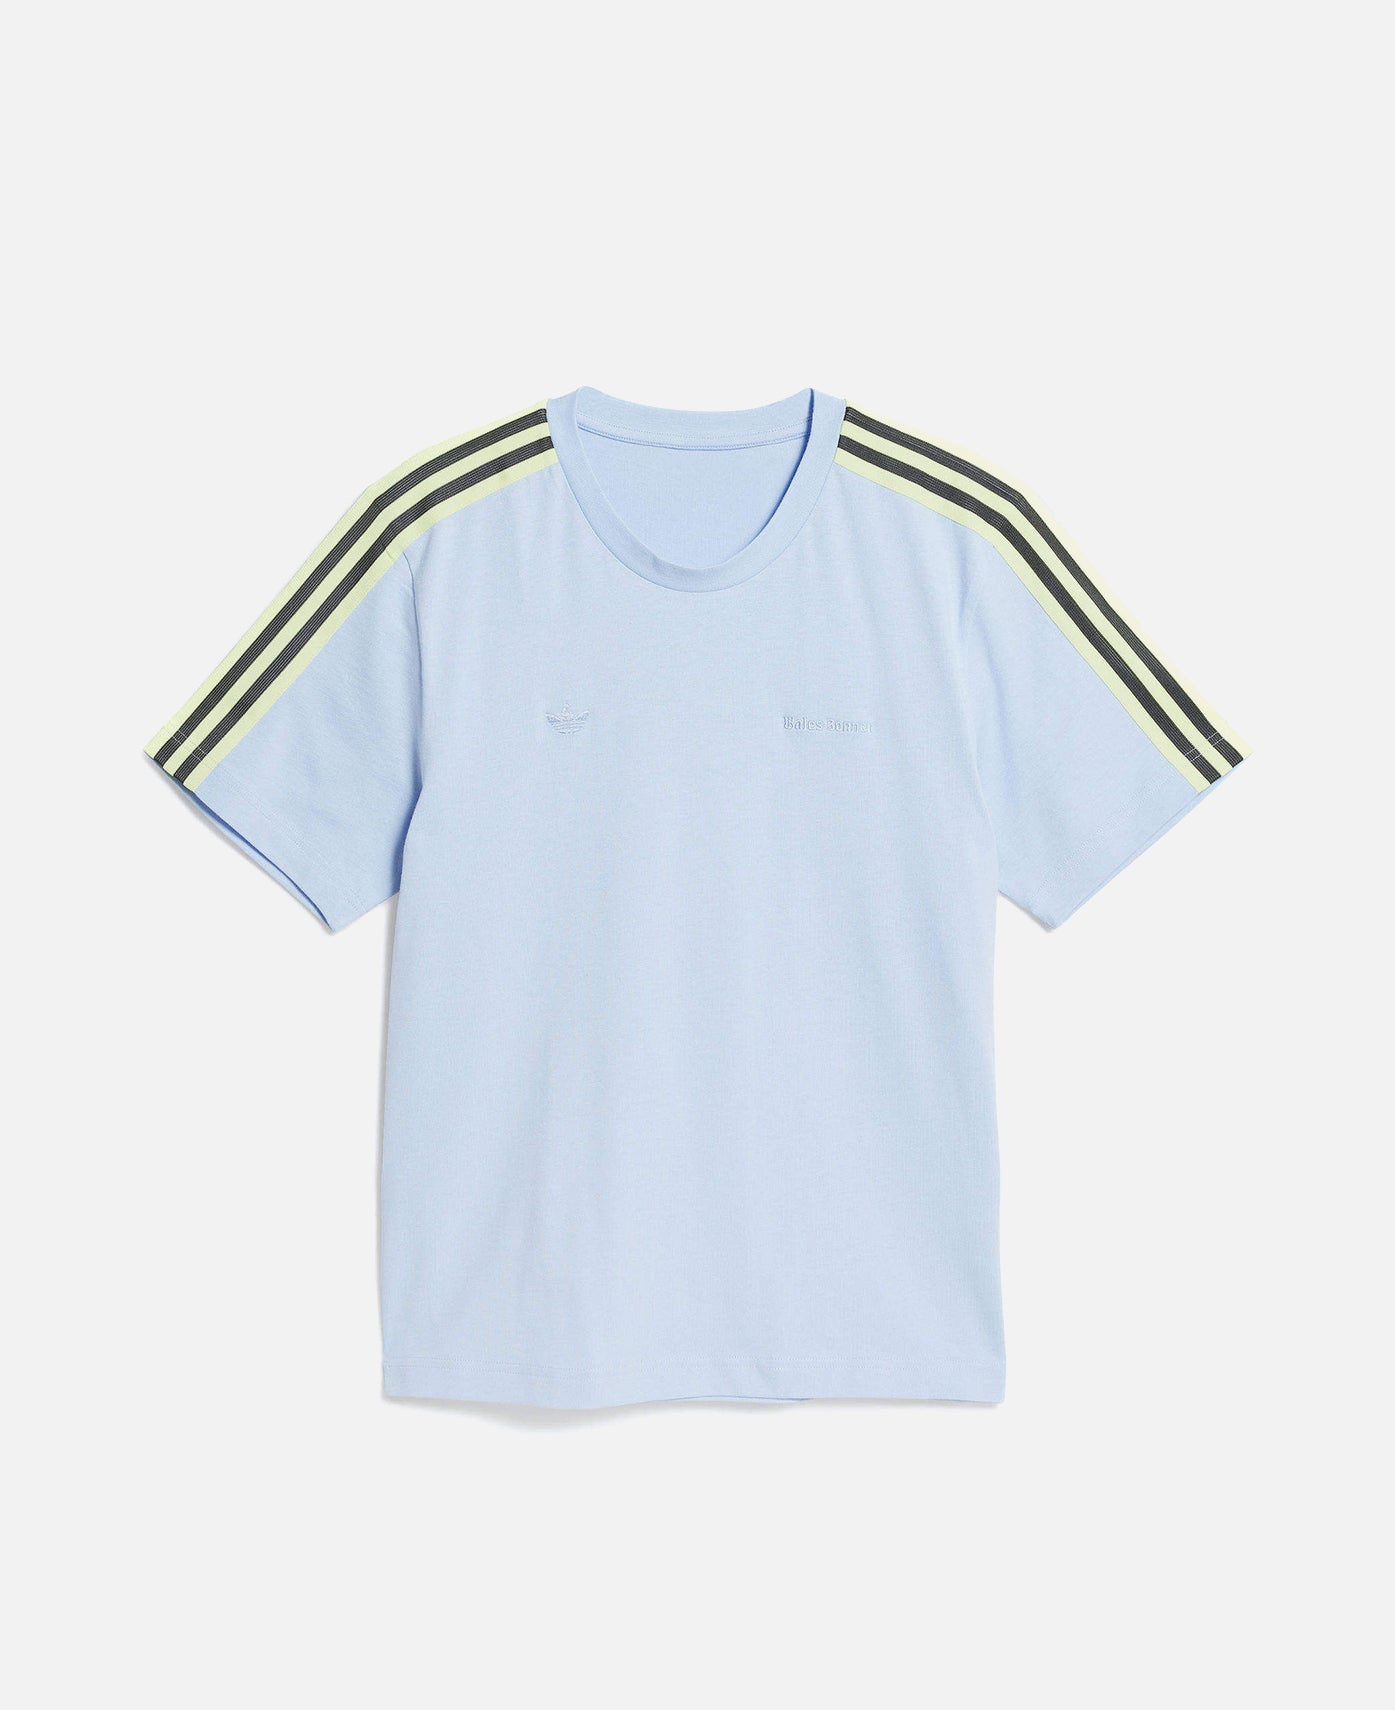 Set-In T-Shirt (Blue)